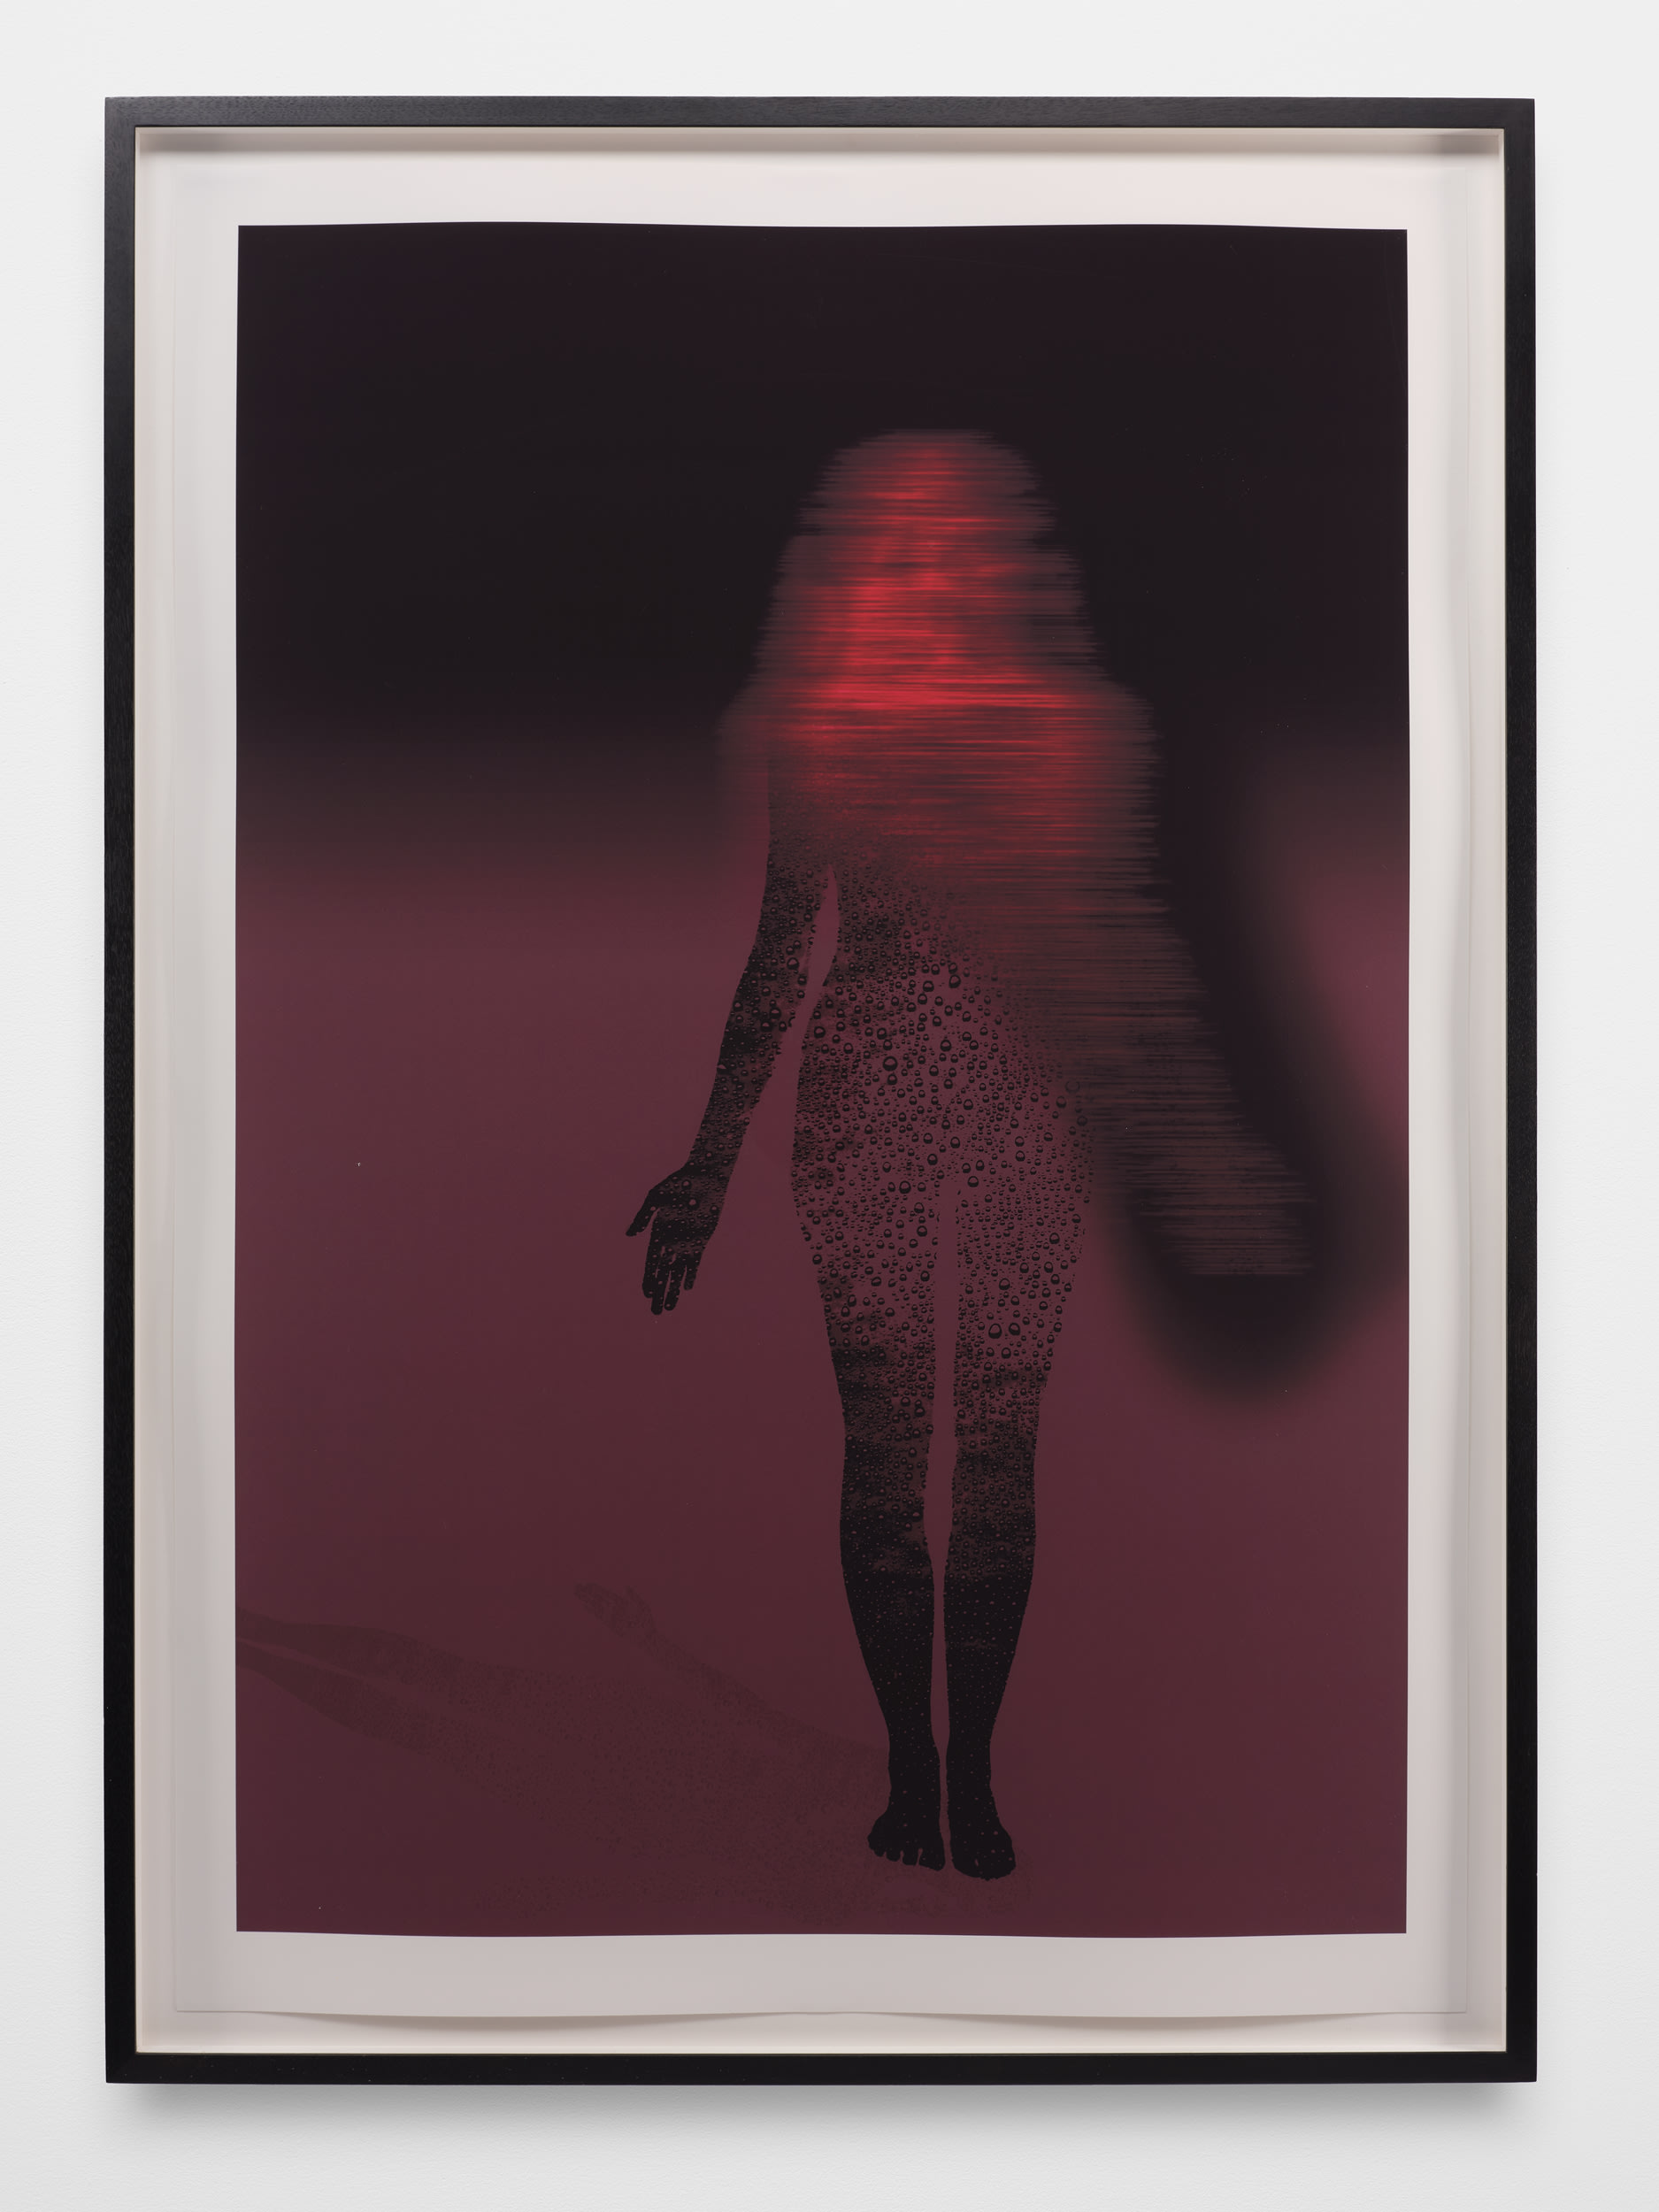 Lynn Hershman Water women red – Violet Shadow, photography digital print, edition 1-8 - 123.2 x 88.6 (cm), 48.5 x 34.9 (inch), USD 25,001 – 50,000 at Altman Siegel